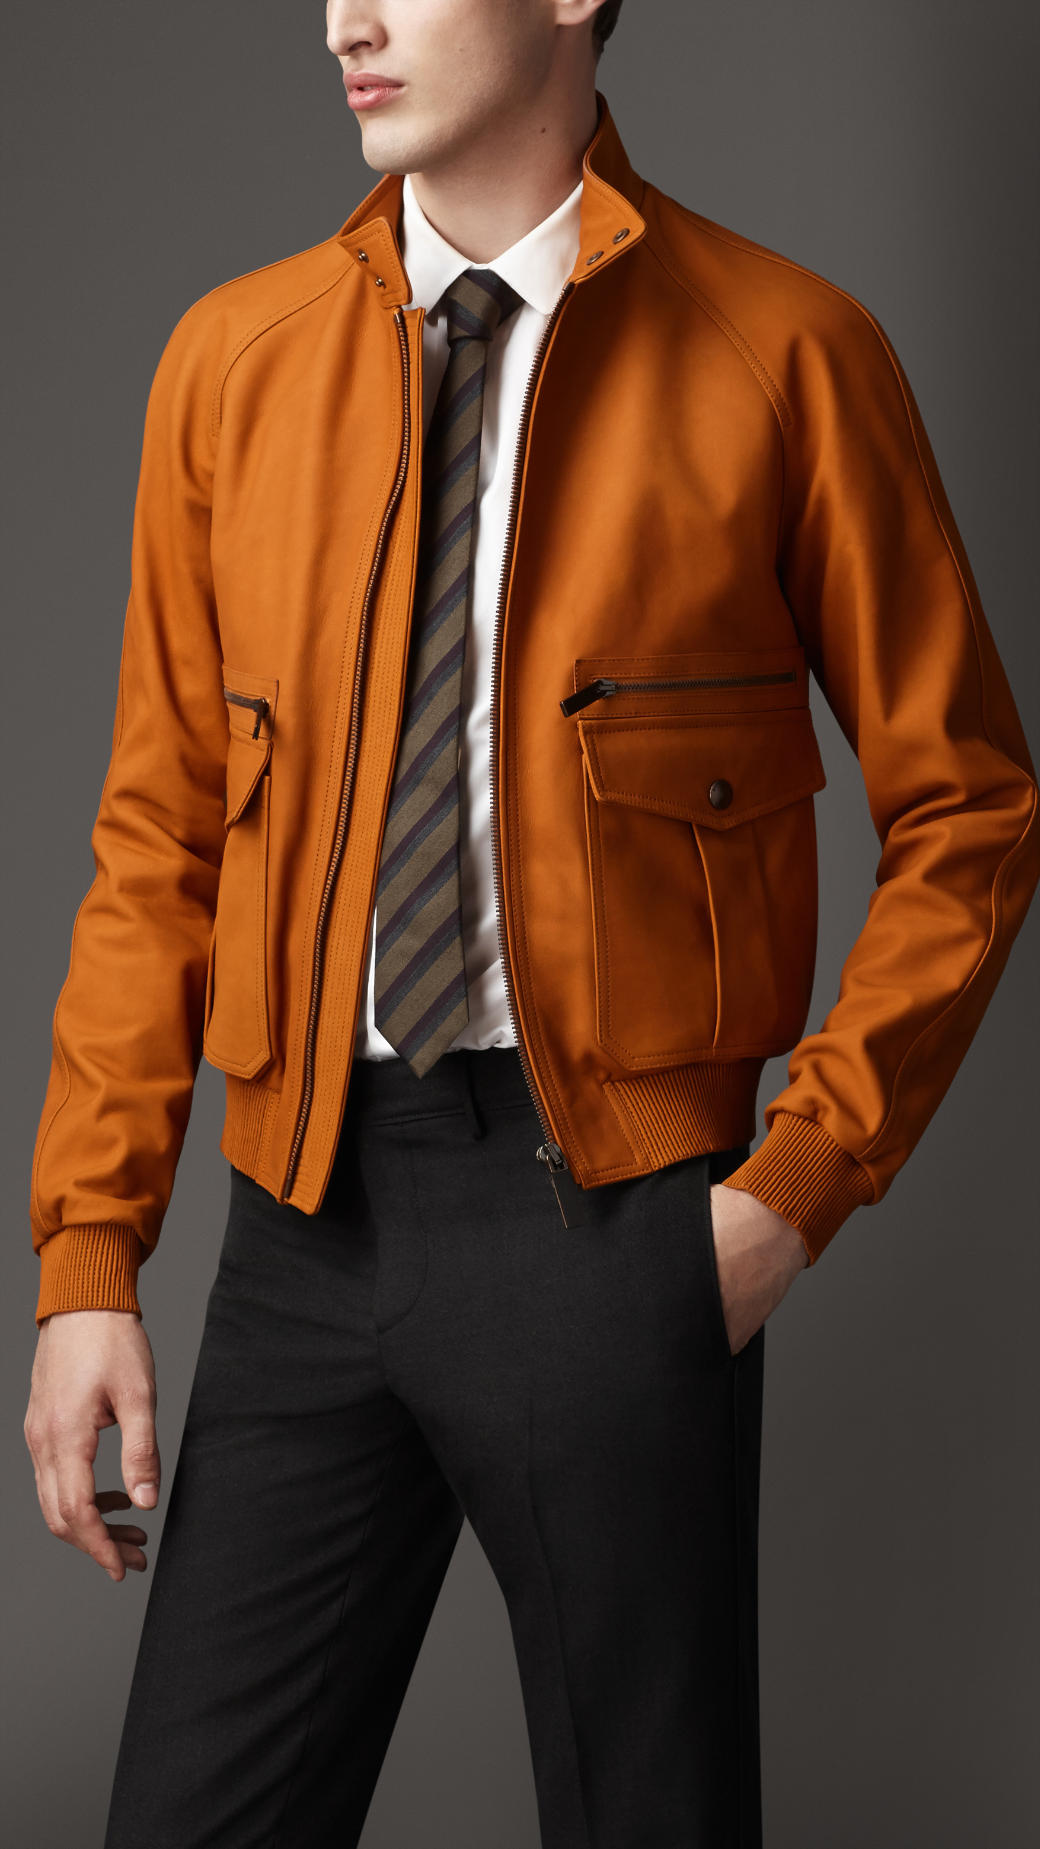 Lyst - Burberry Leather Bomber Jacket in Orange for Men